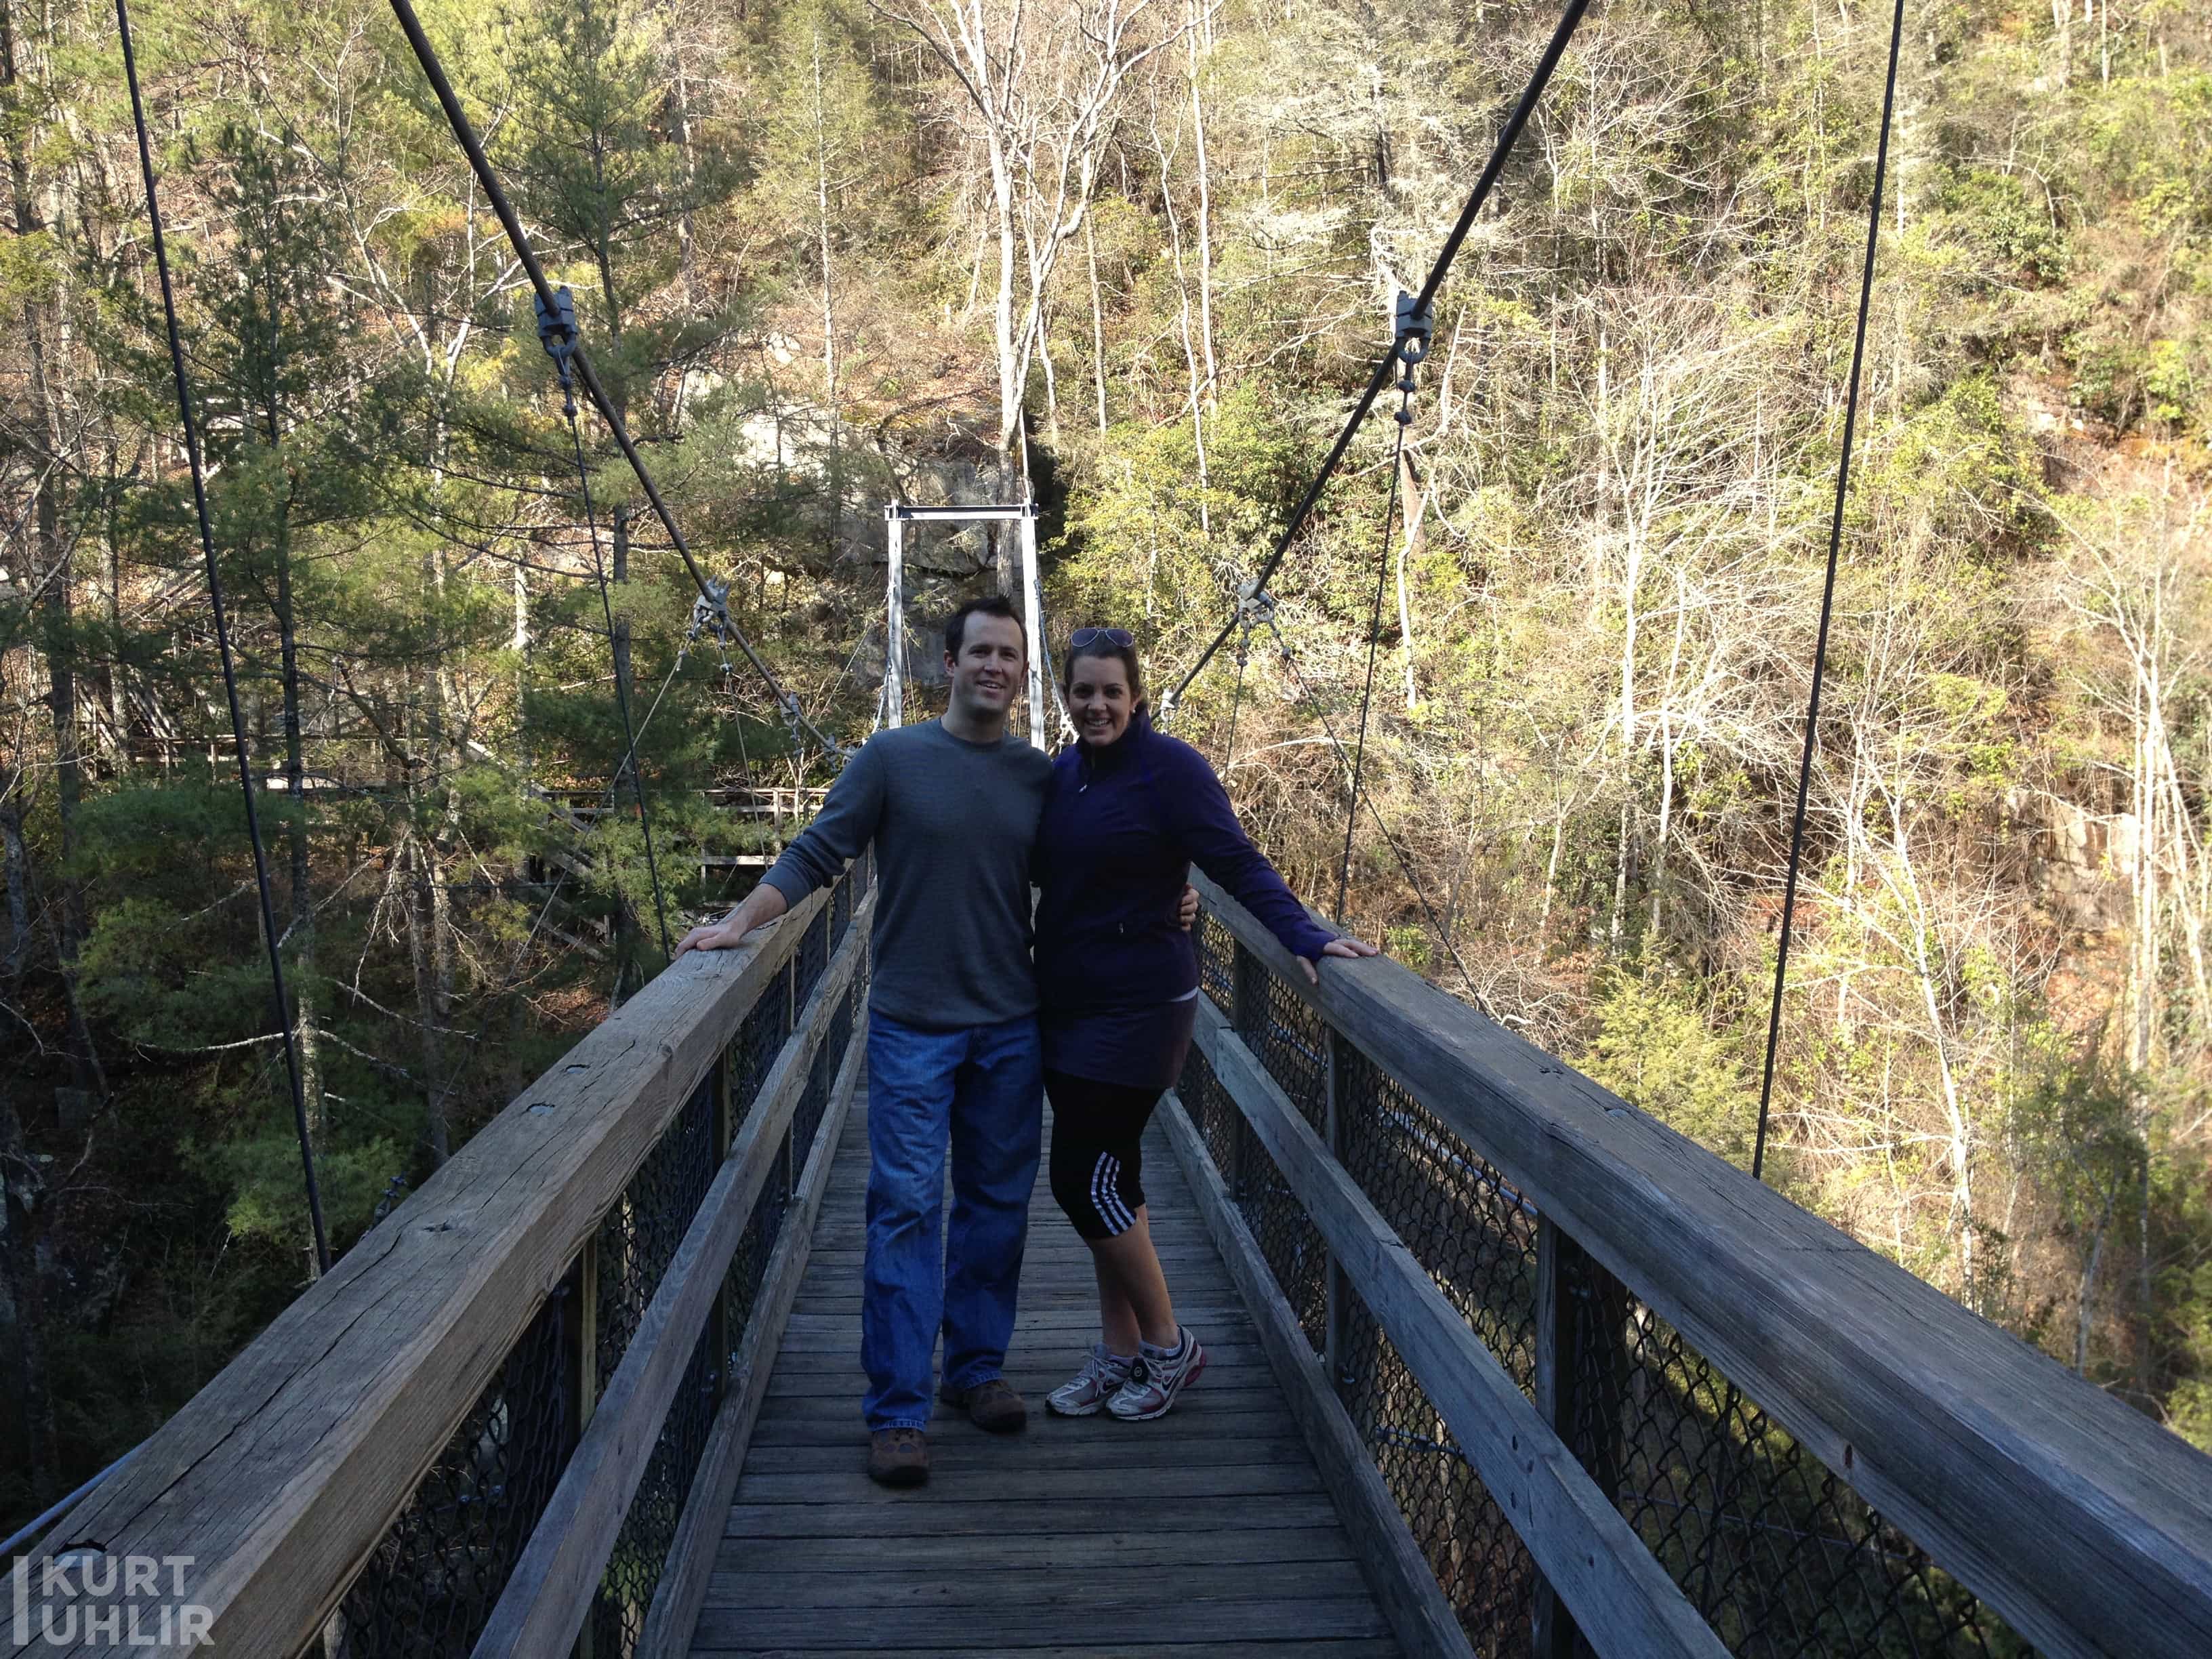 Tallulah Gorge State Park - Valerie and Kurt Uhlir